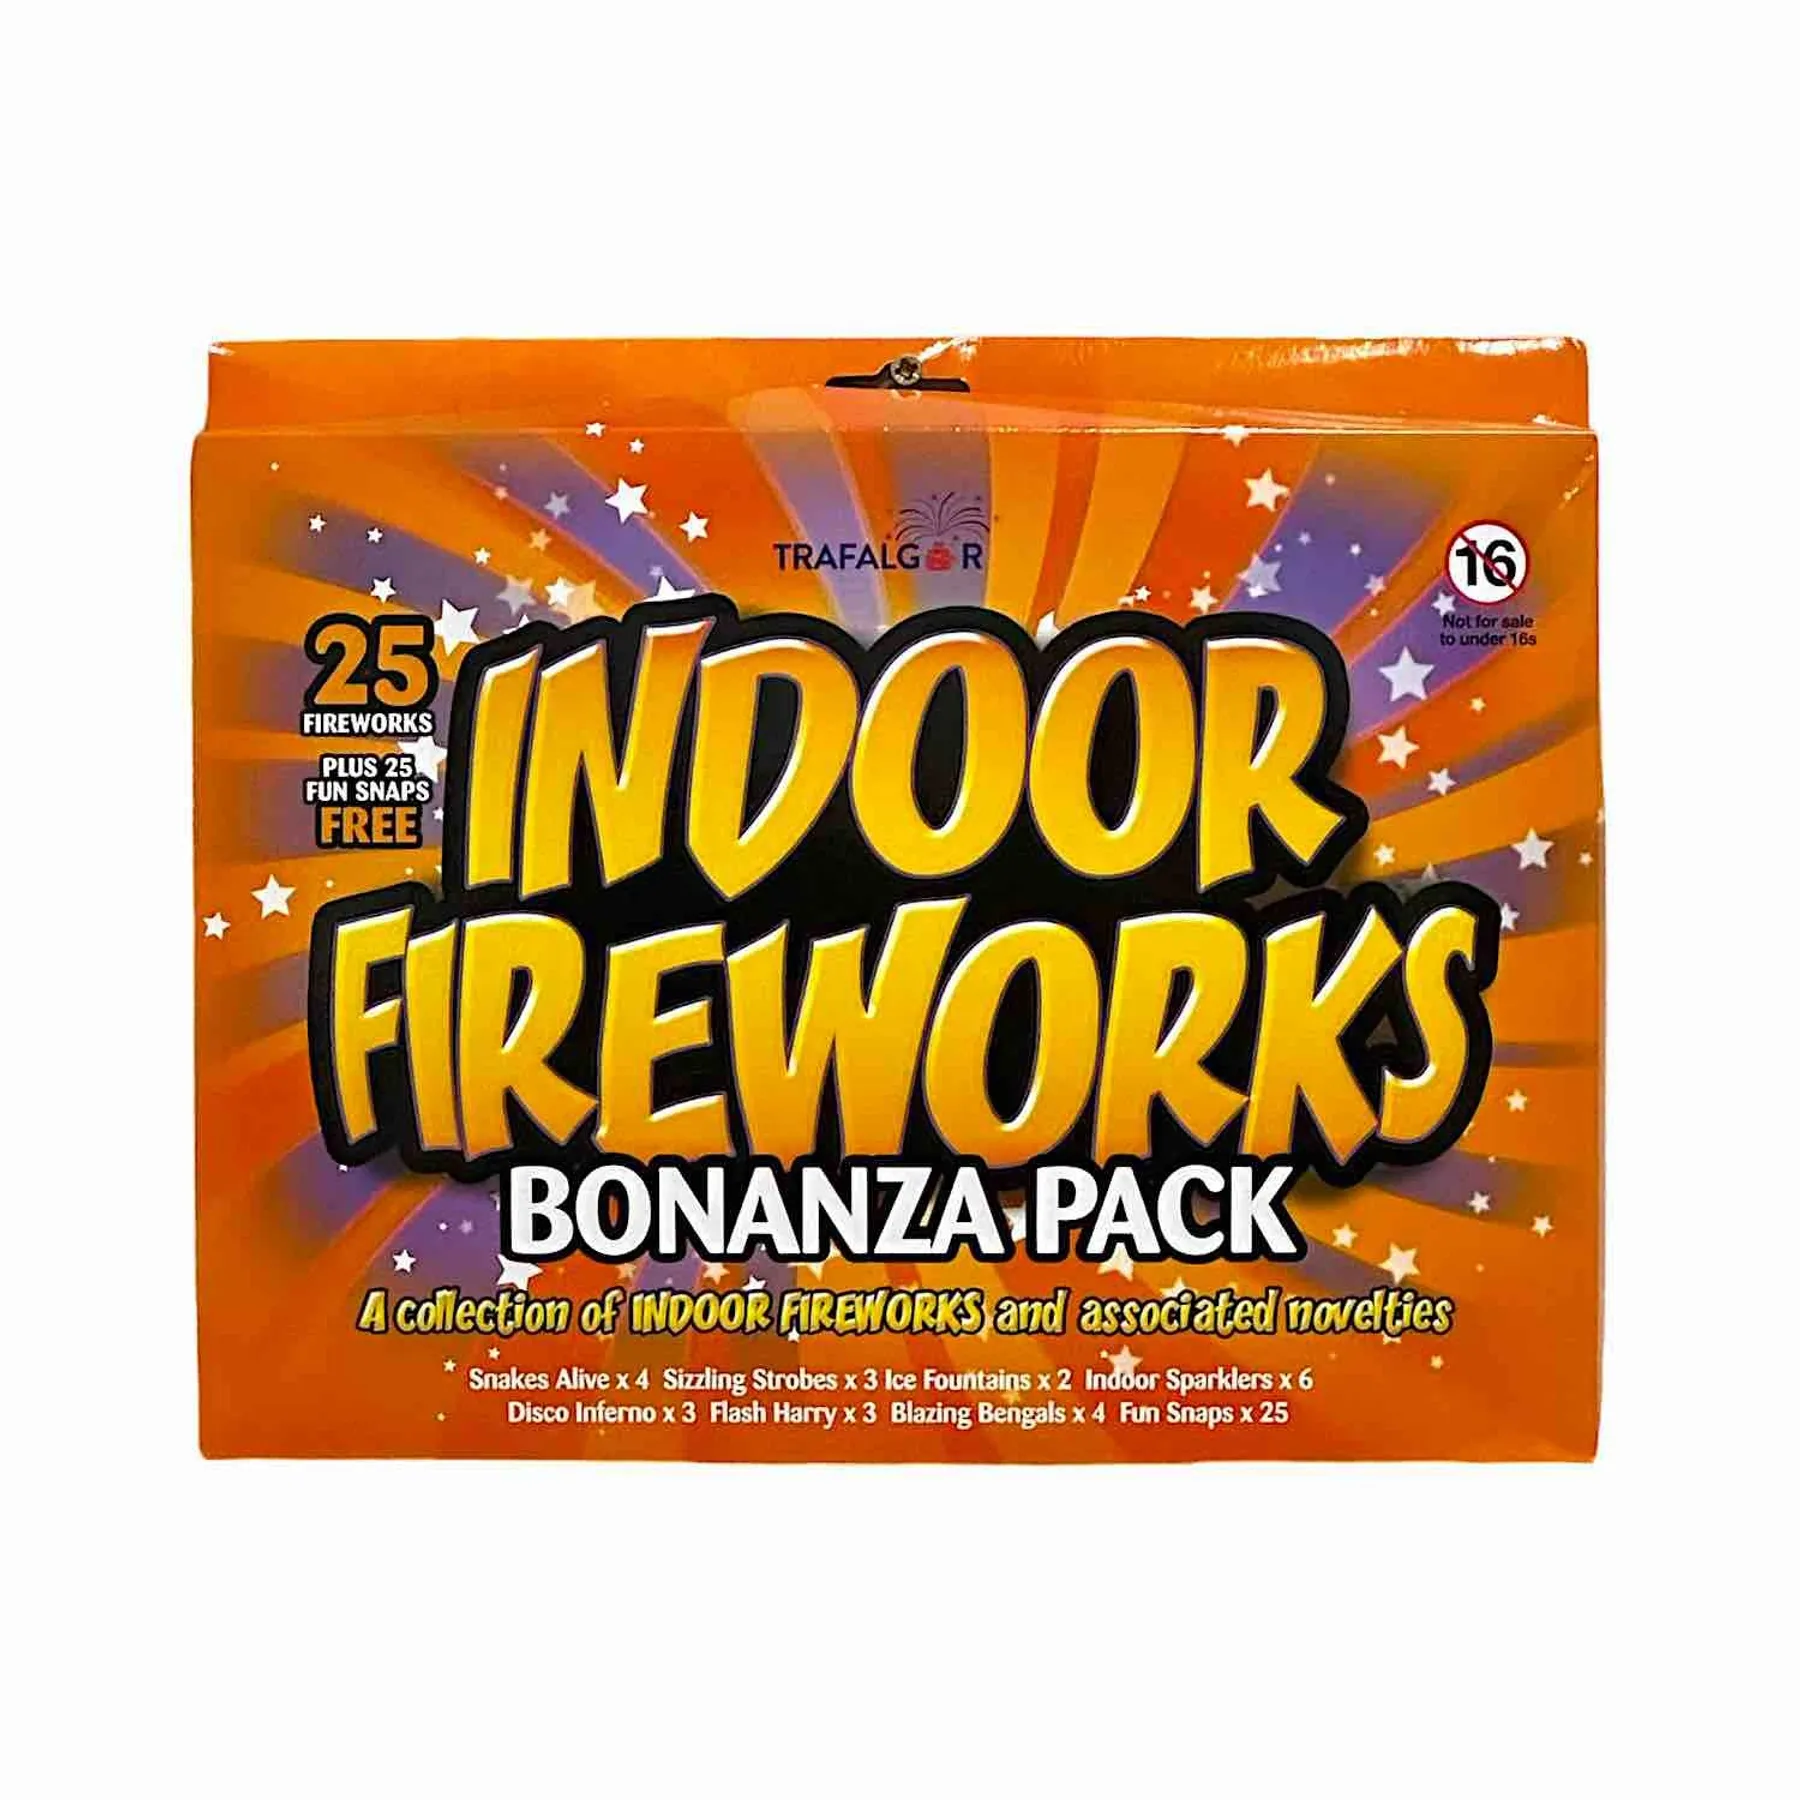 Indoor Fireworks Trafalgar Manchester Fireworks